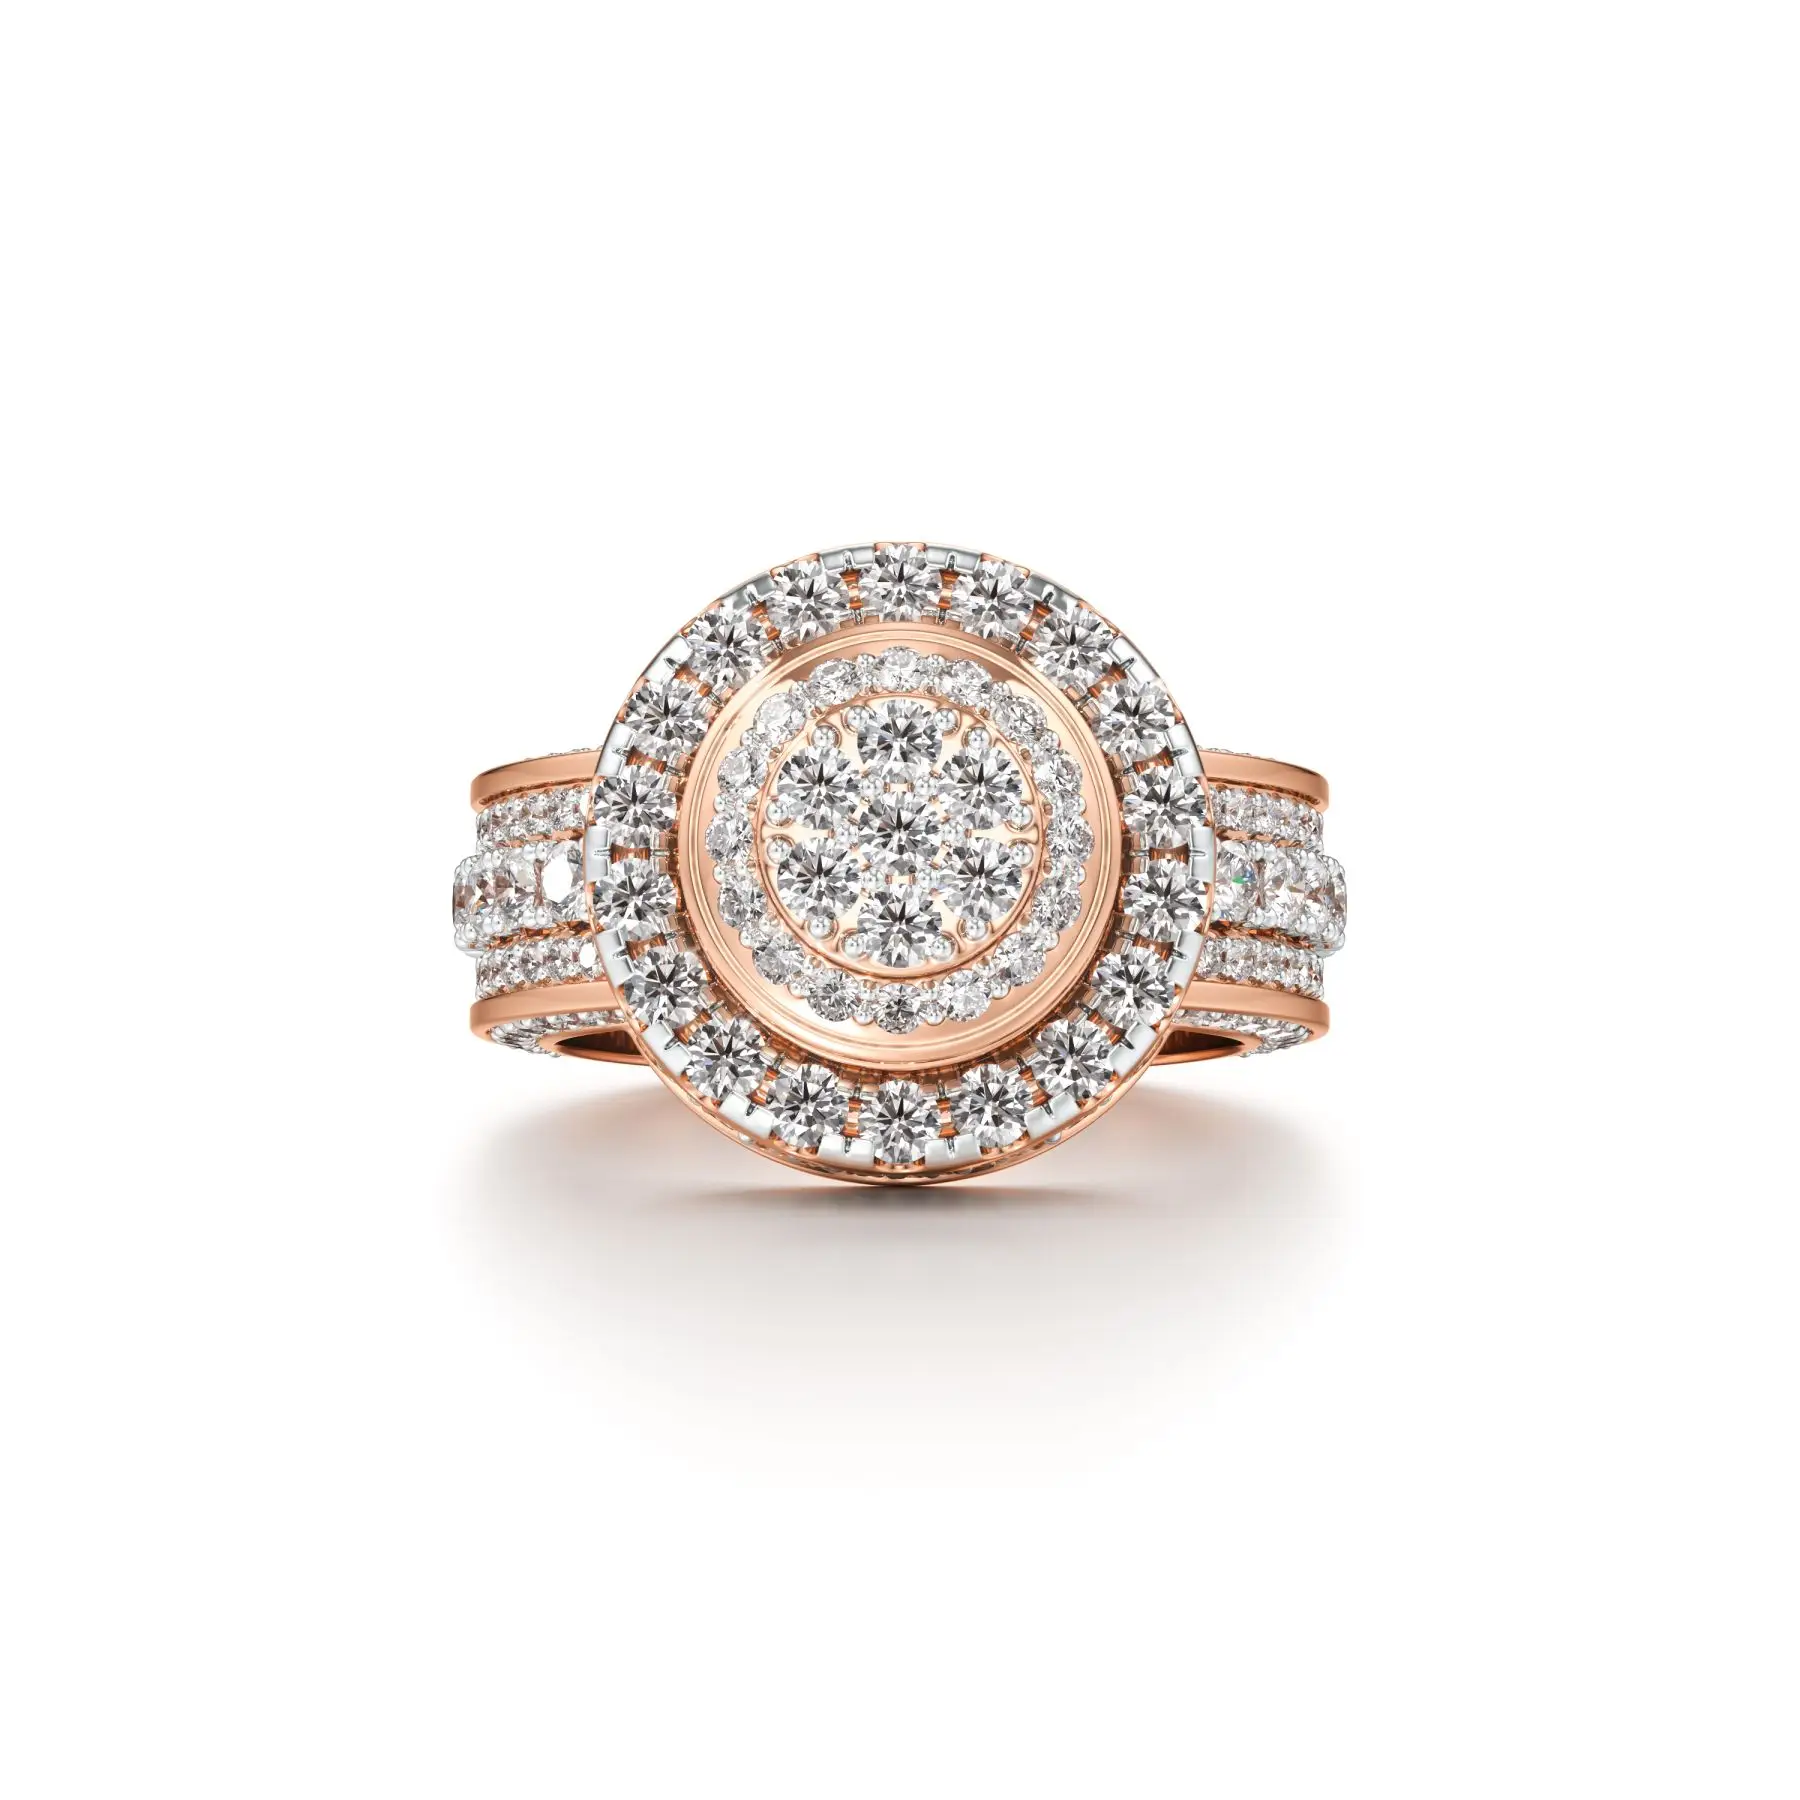 Stunning Protruding Diamond Ring in Rose 10k Gold